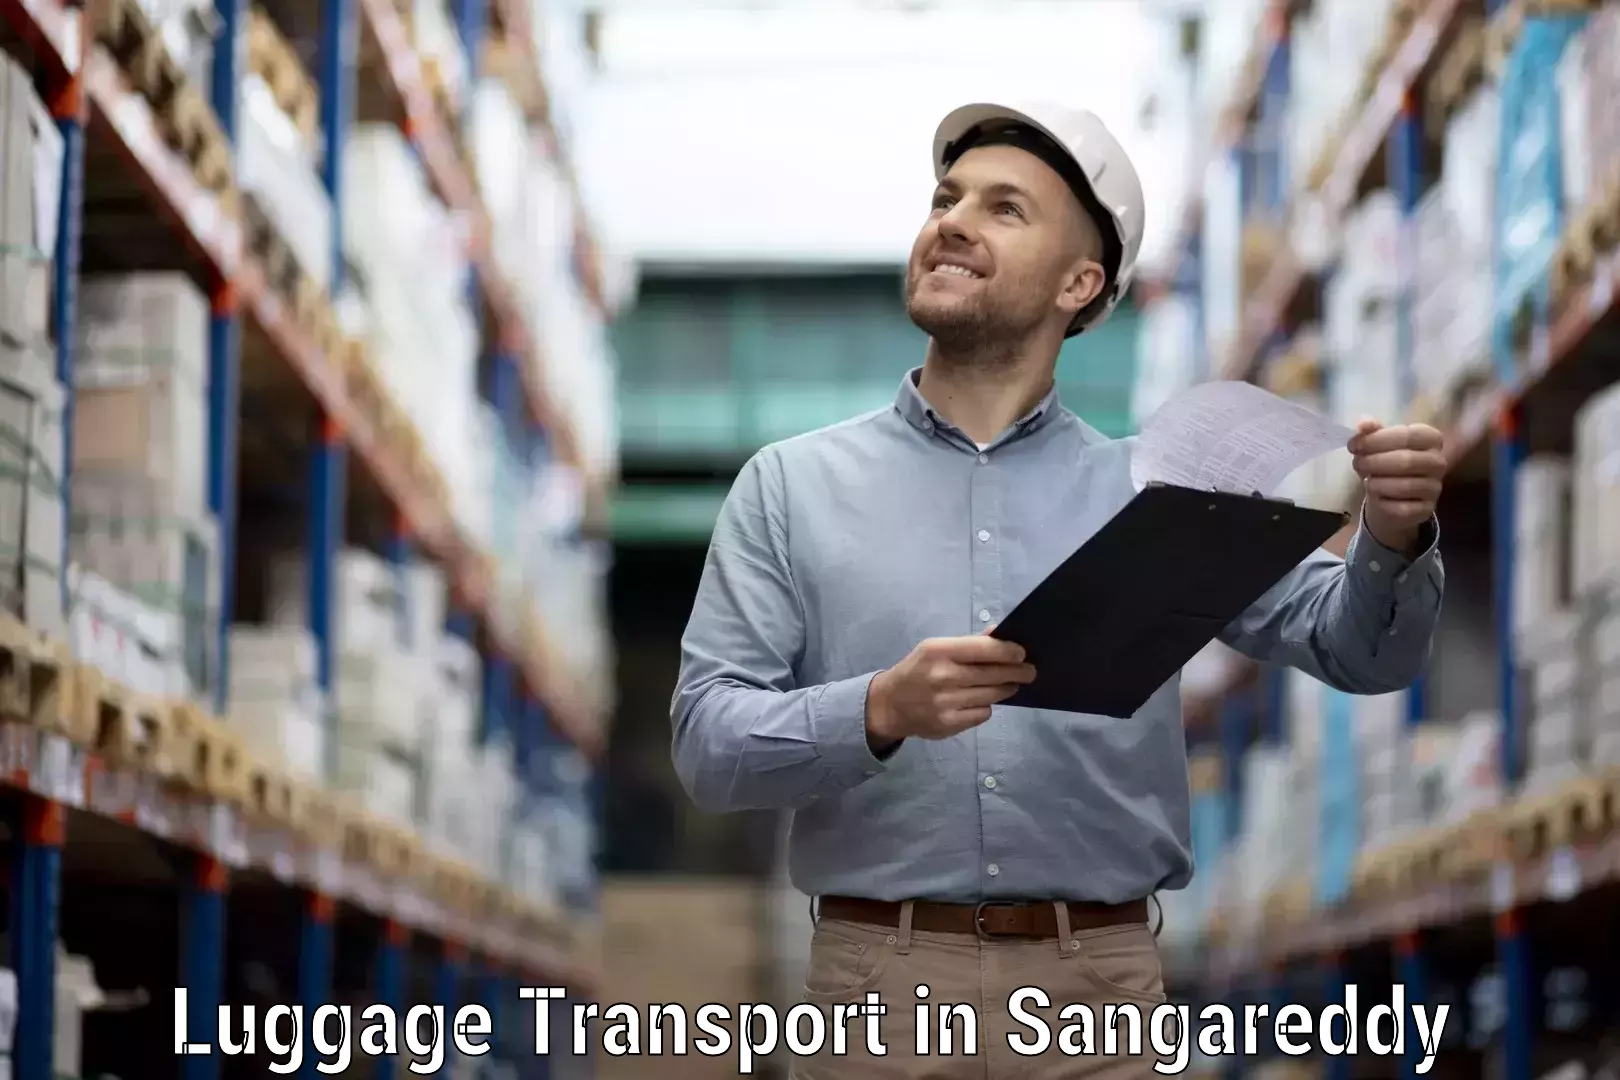 Luggage shipment tracking in Sangareddy